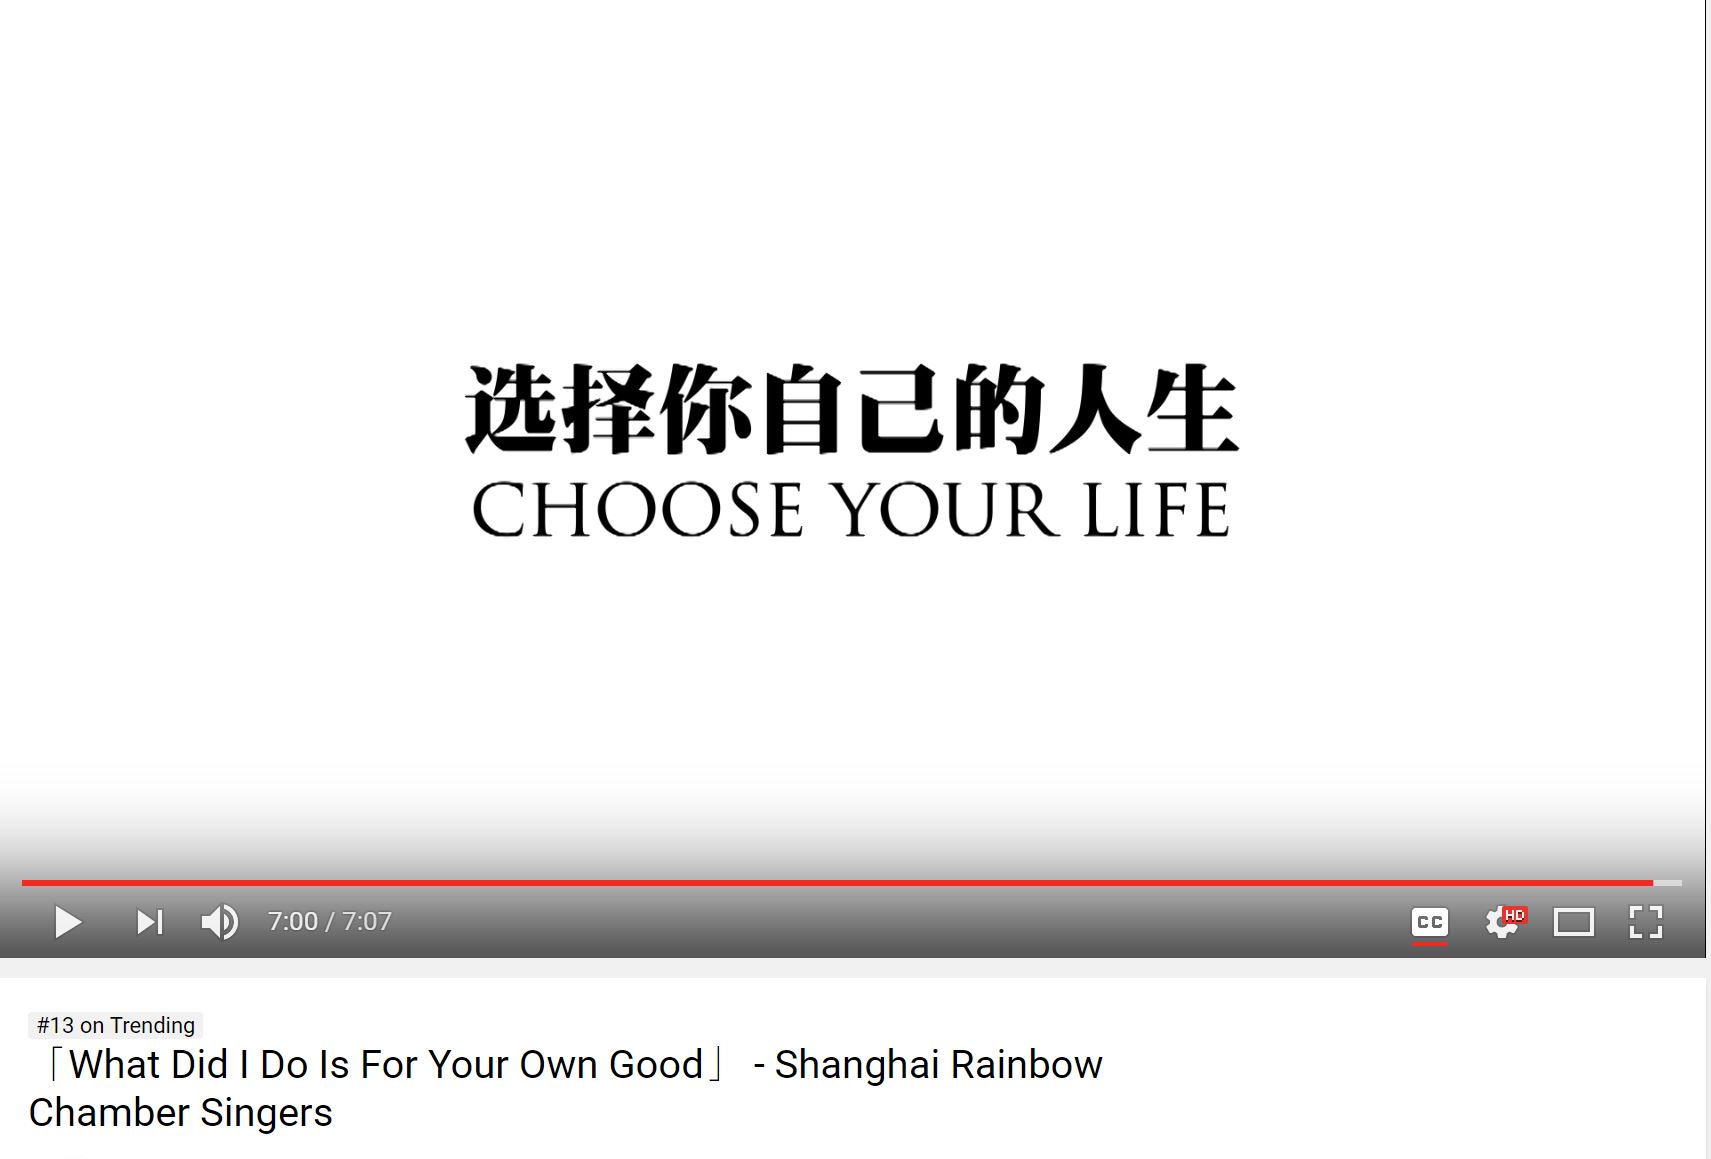 Source: Shanghai Rainbow Singers